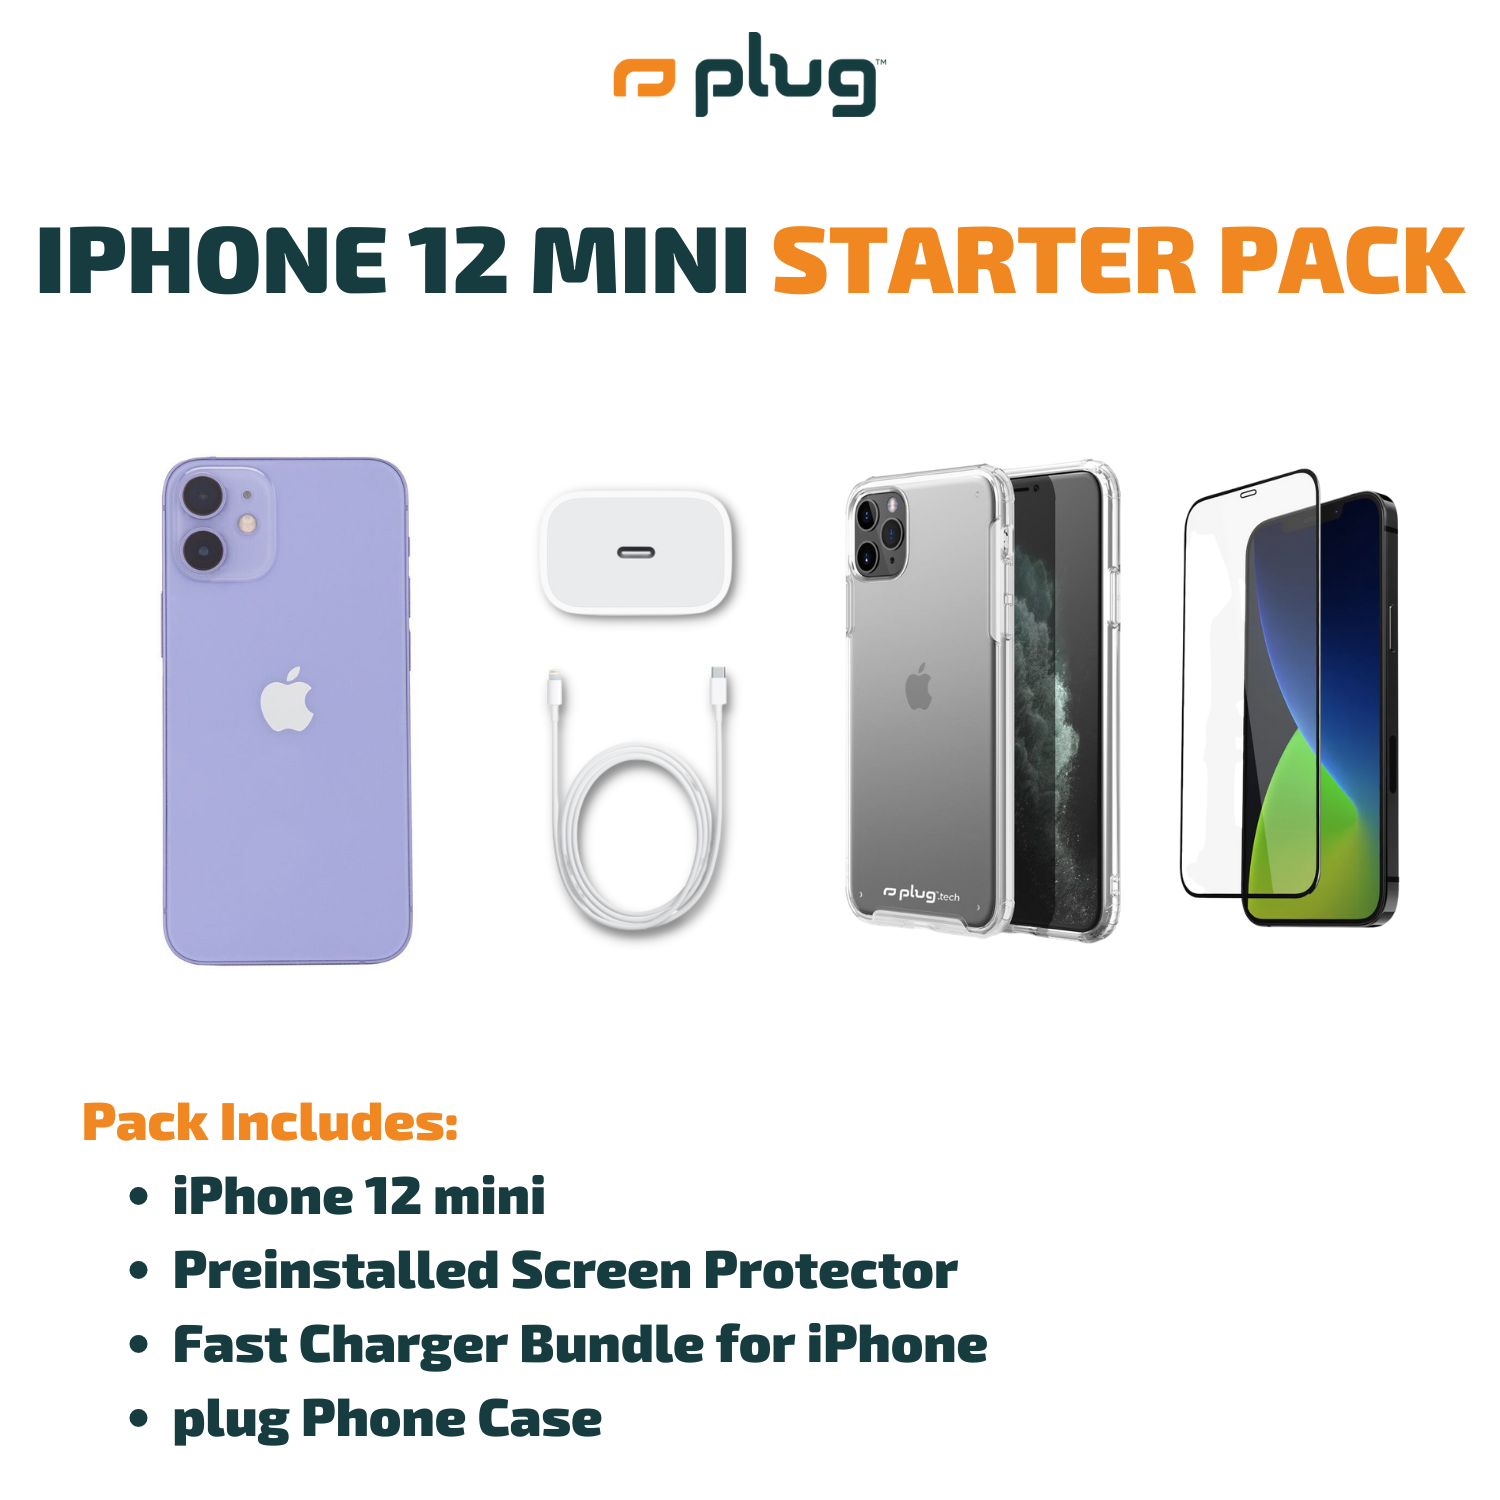 iPhone Xr - Starter Pack